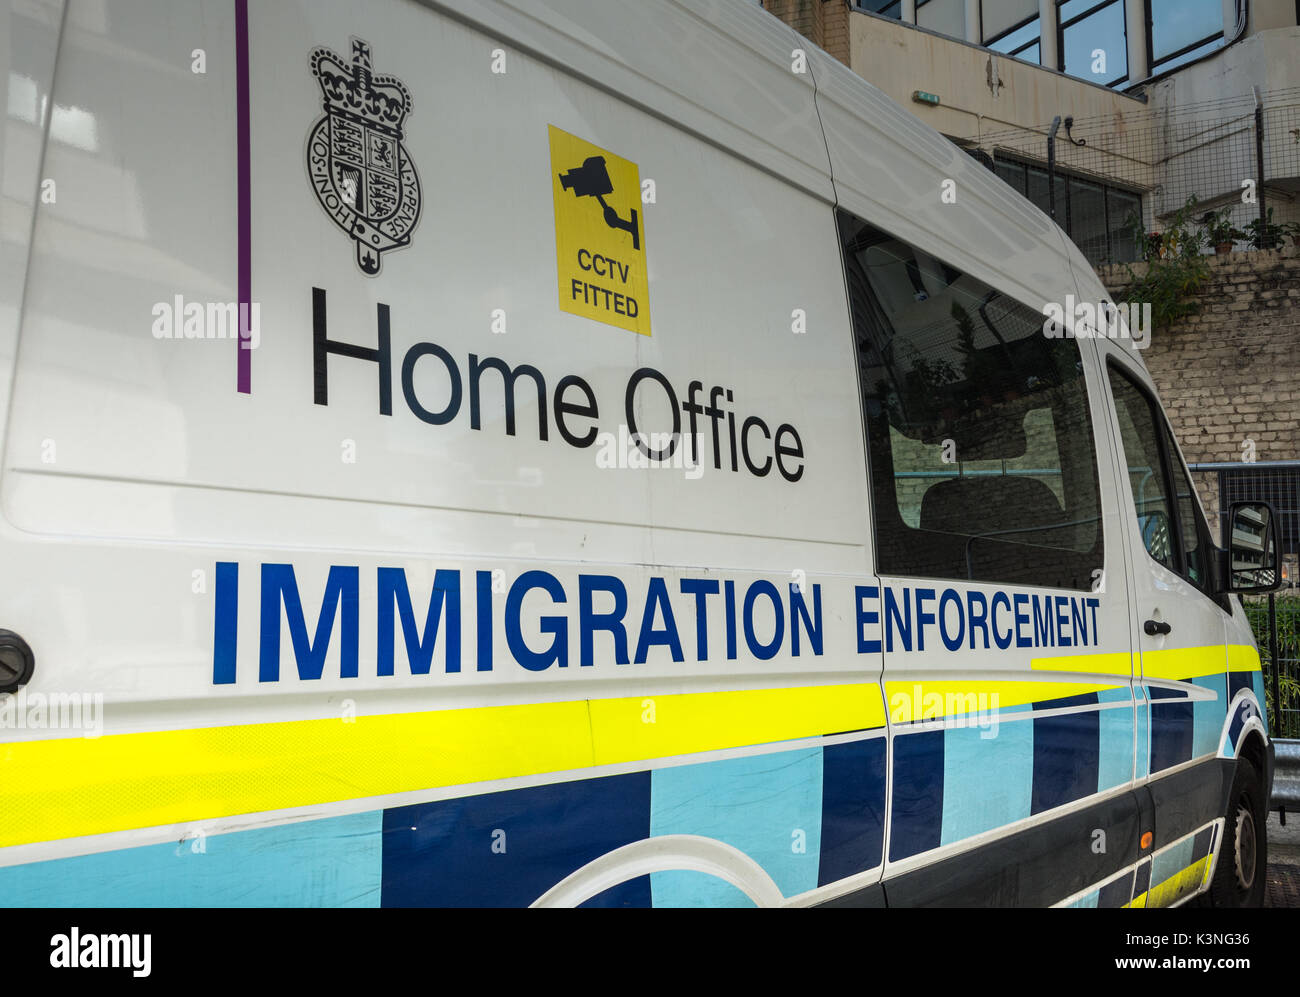 Home Office Immigration Enforcement Vehicle in Southwark, London, SE1, U.K. Stockfoto